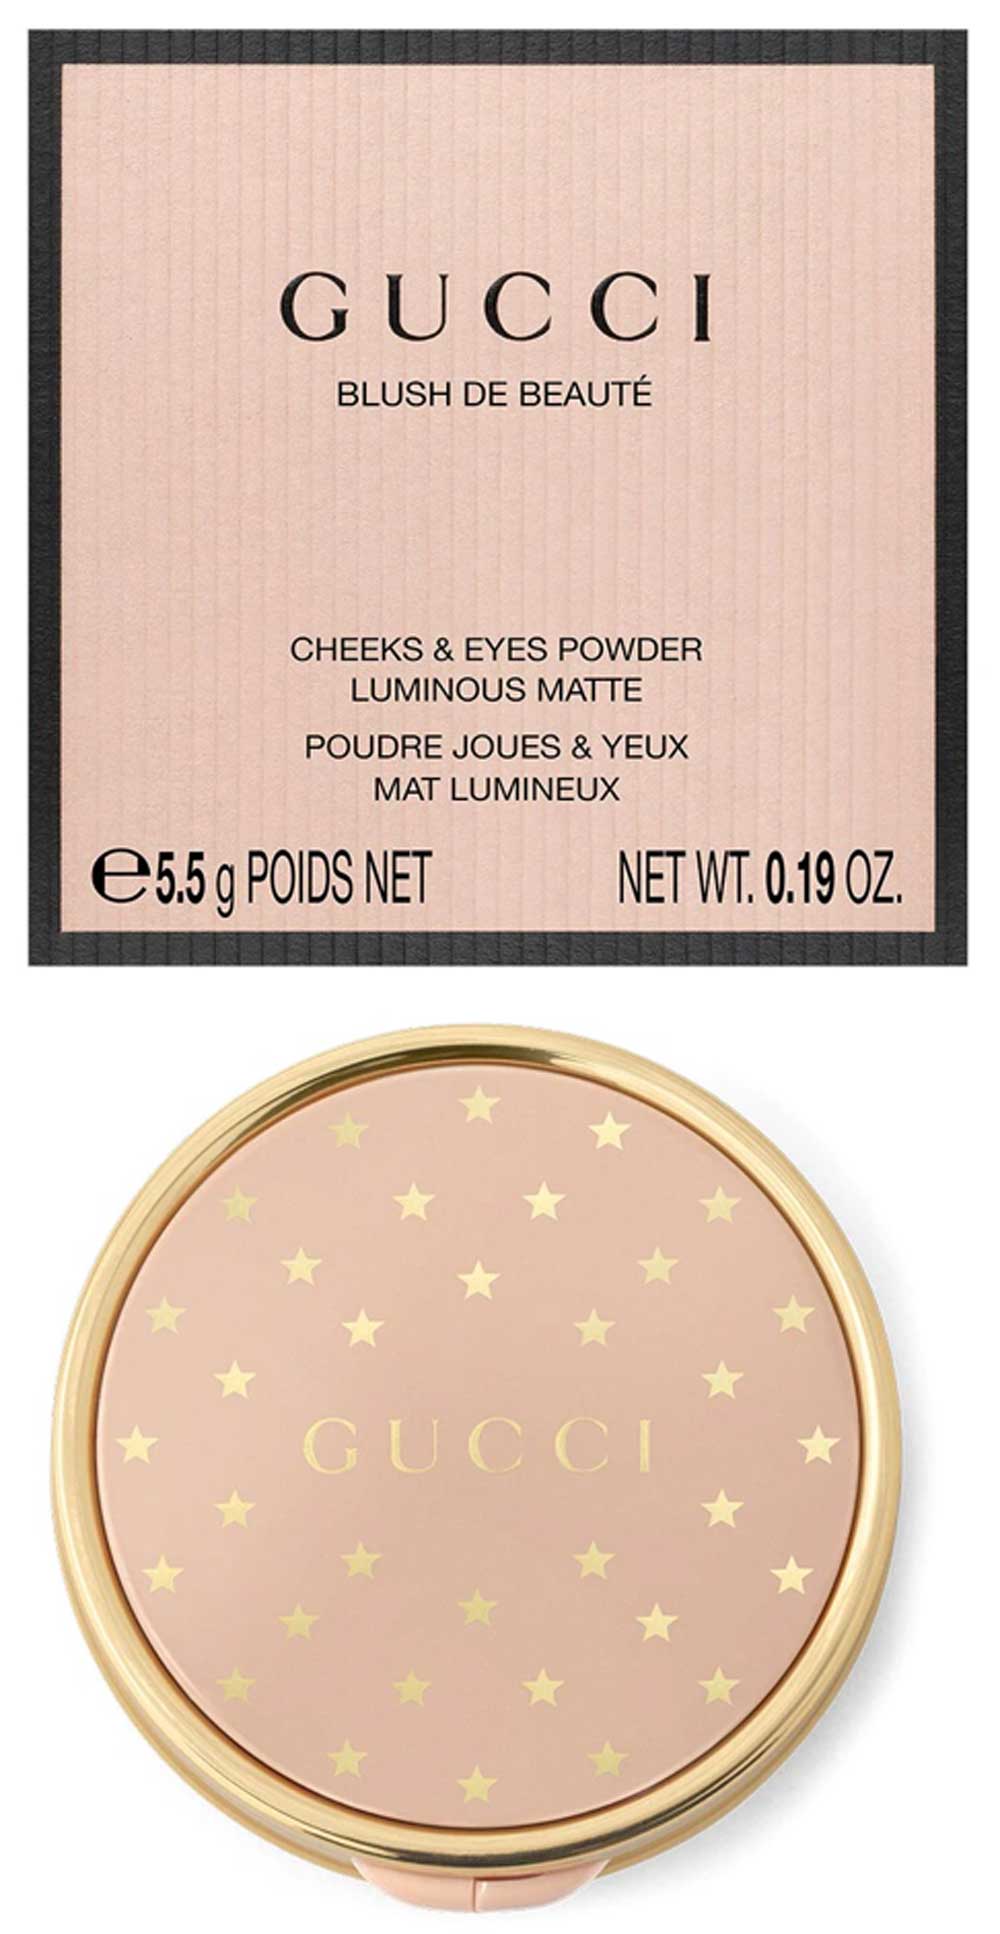 Packaging Gucci Blush de Beauté